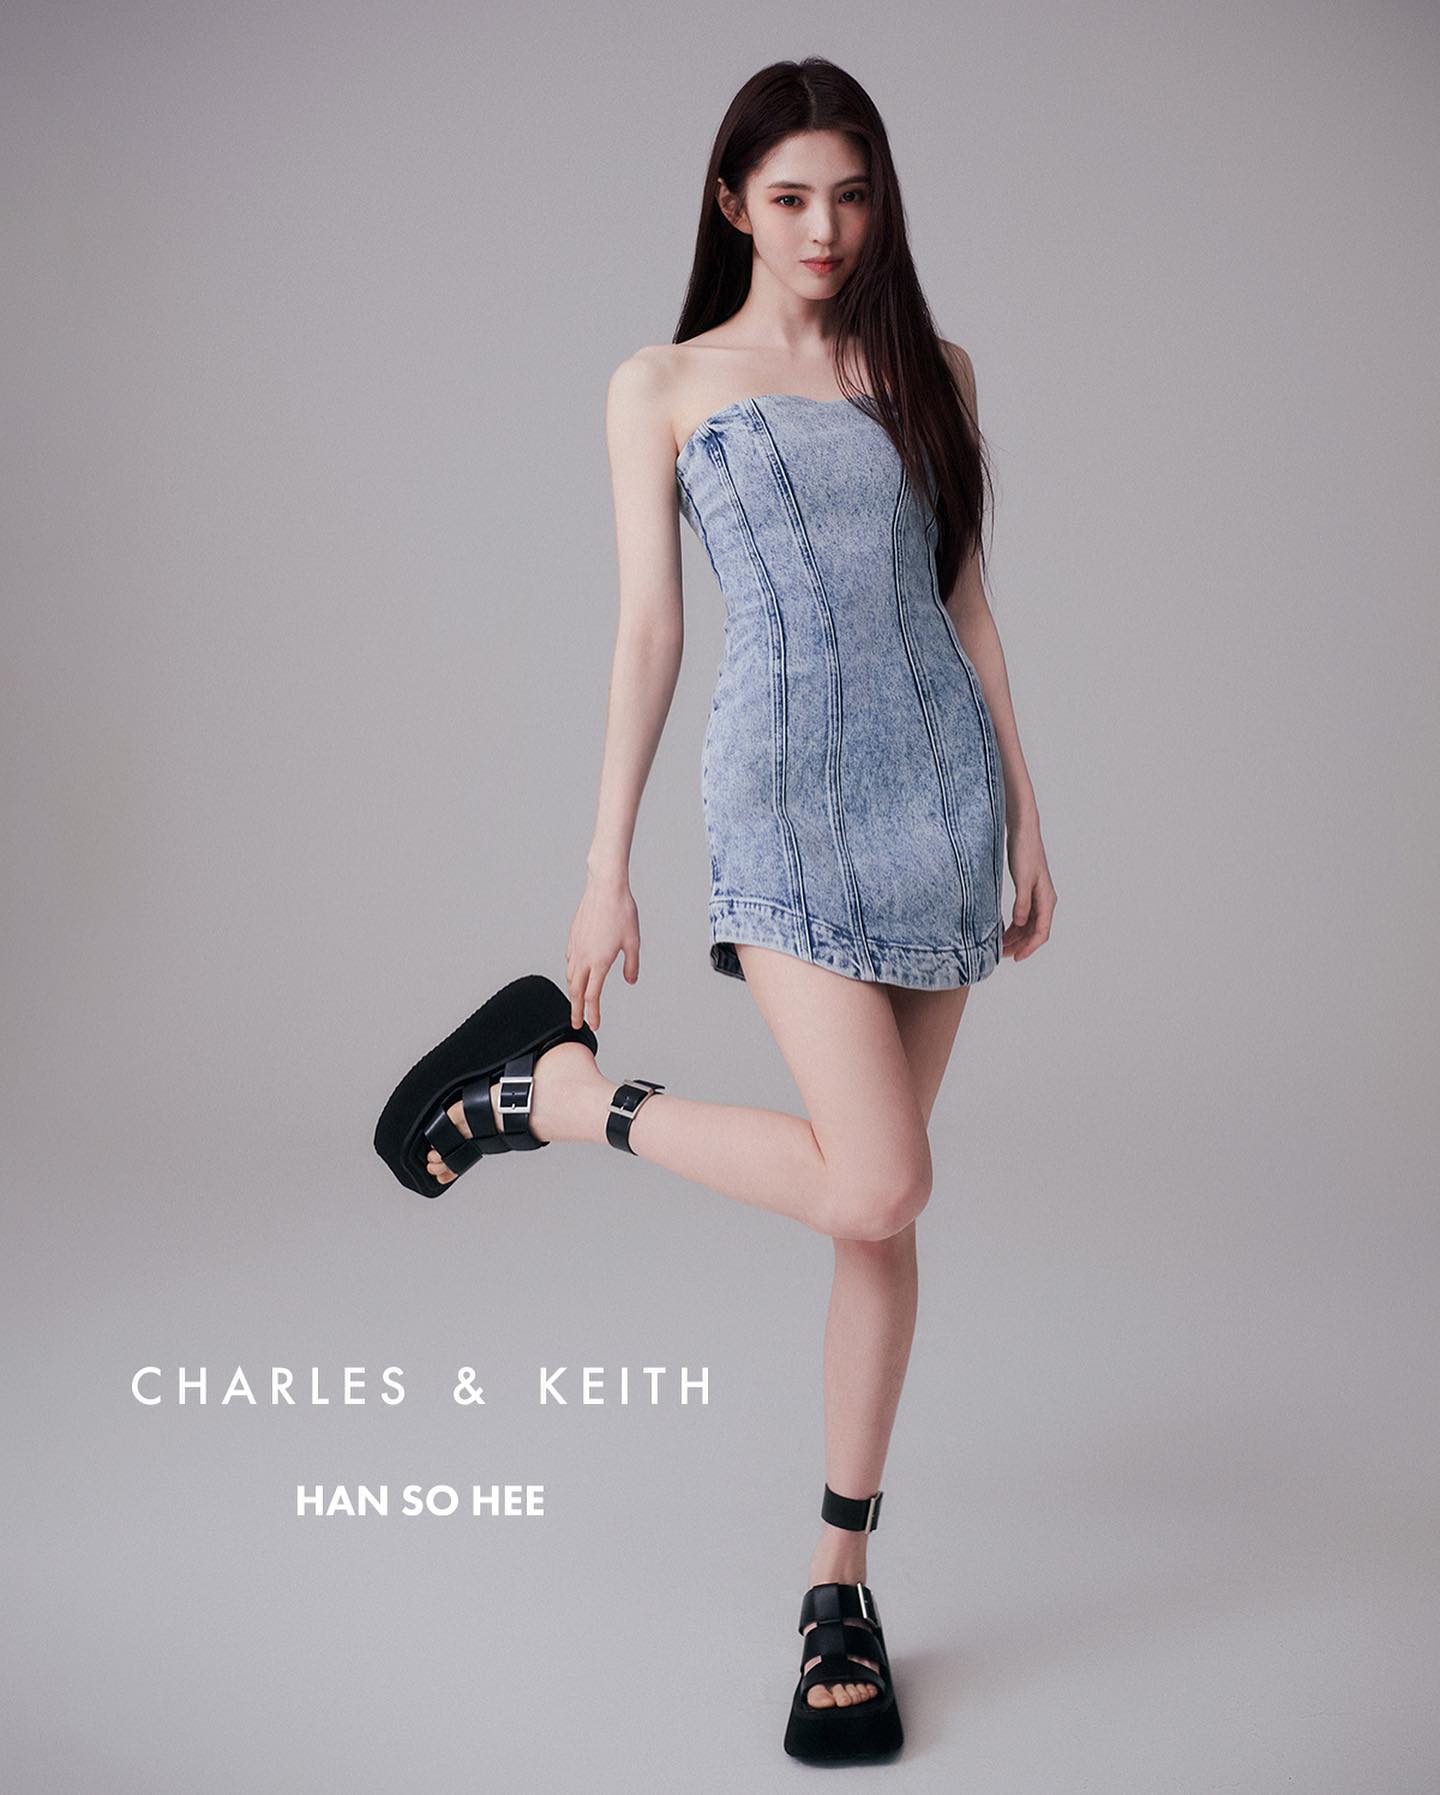 CHARLES & KEITH x HAN SO HEE